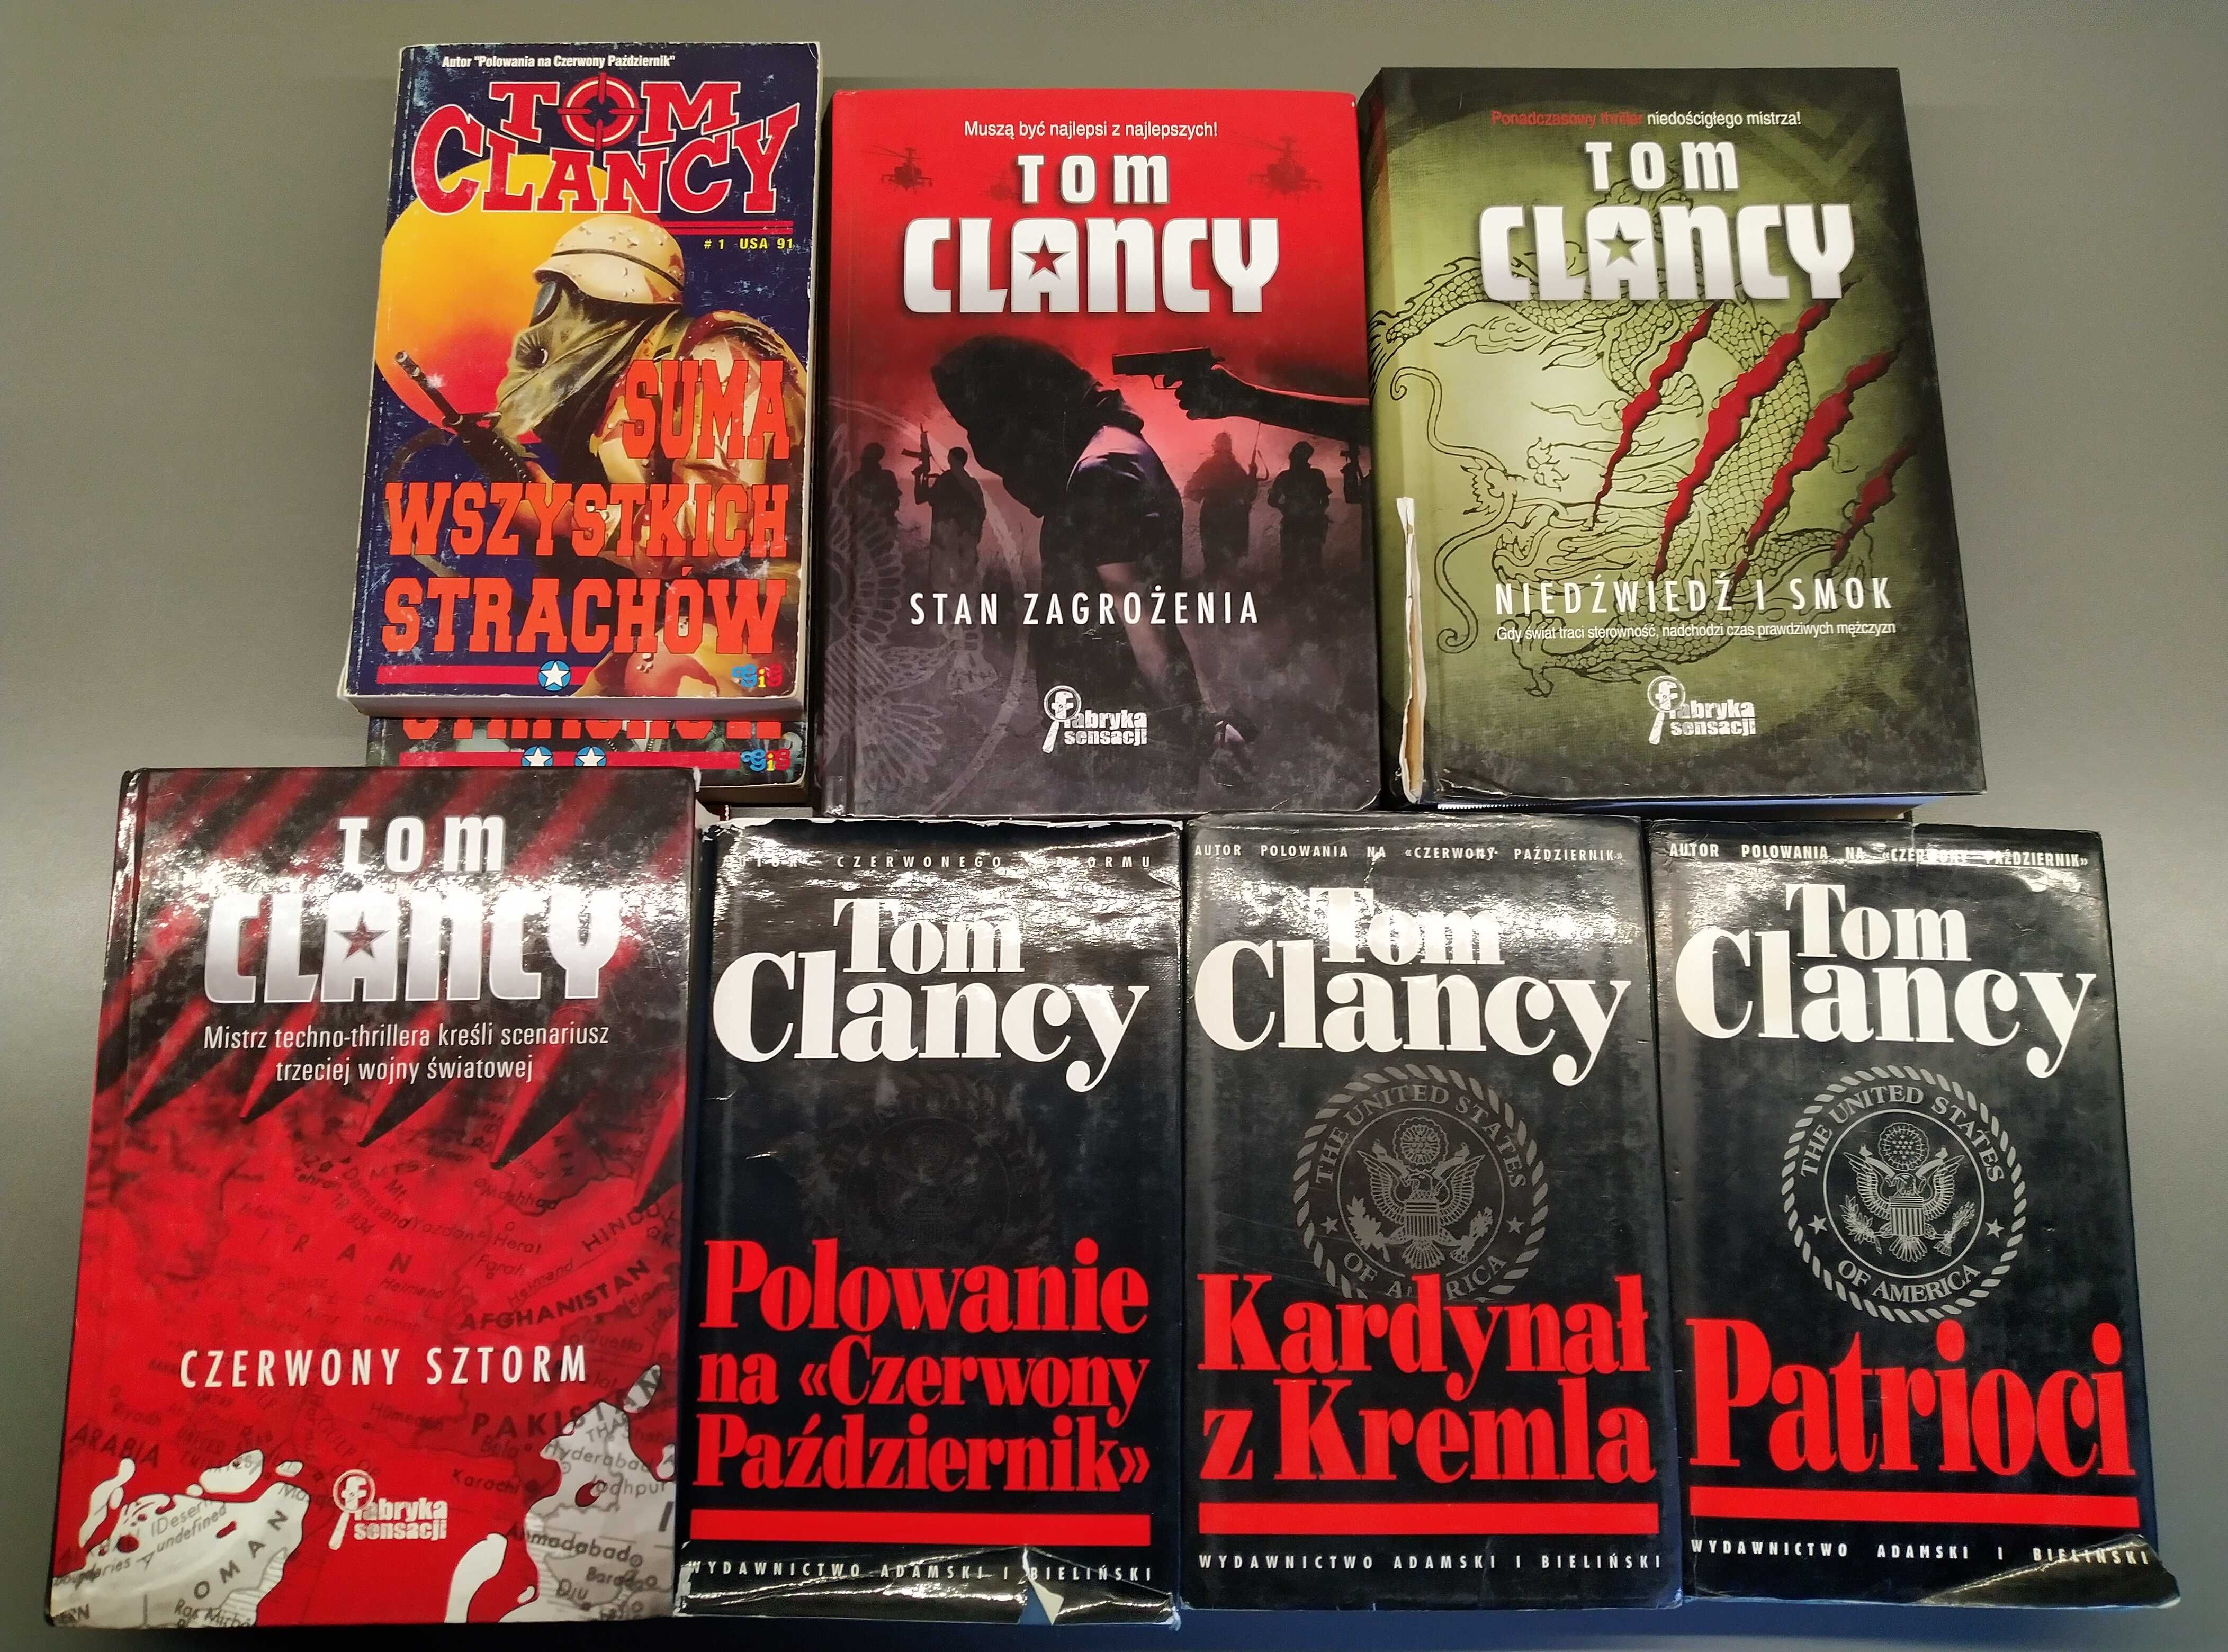 Tom Clancy - Suma wszystkich strachów (The Sum of All Fears)